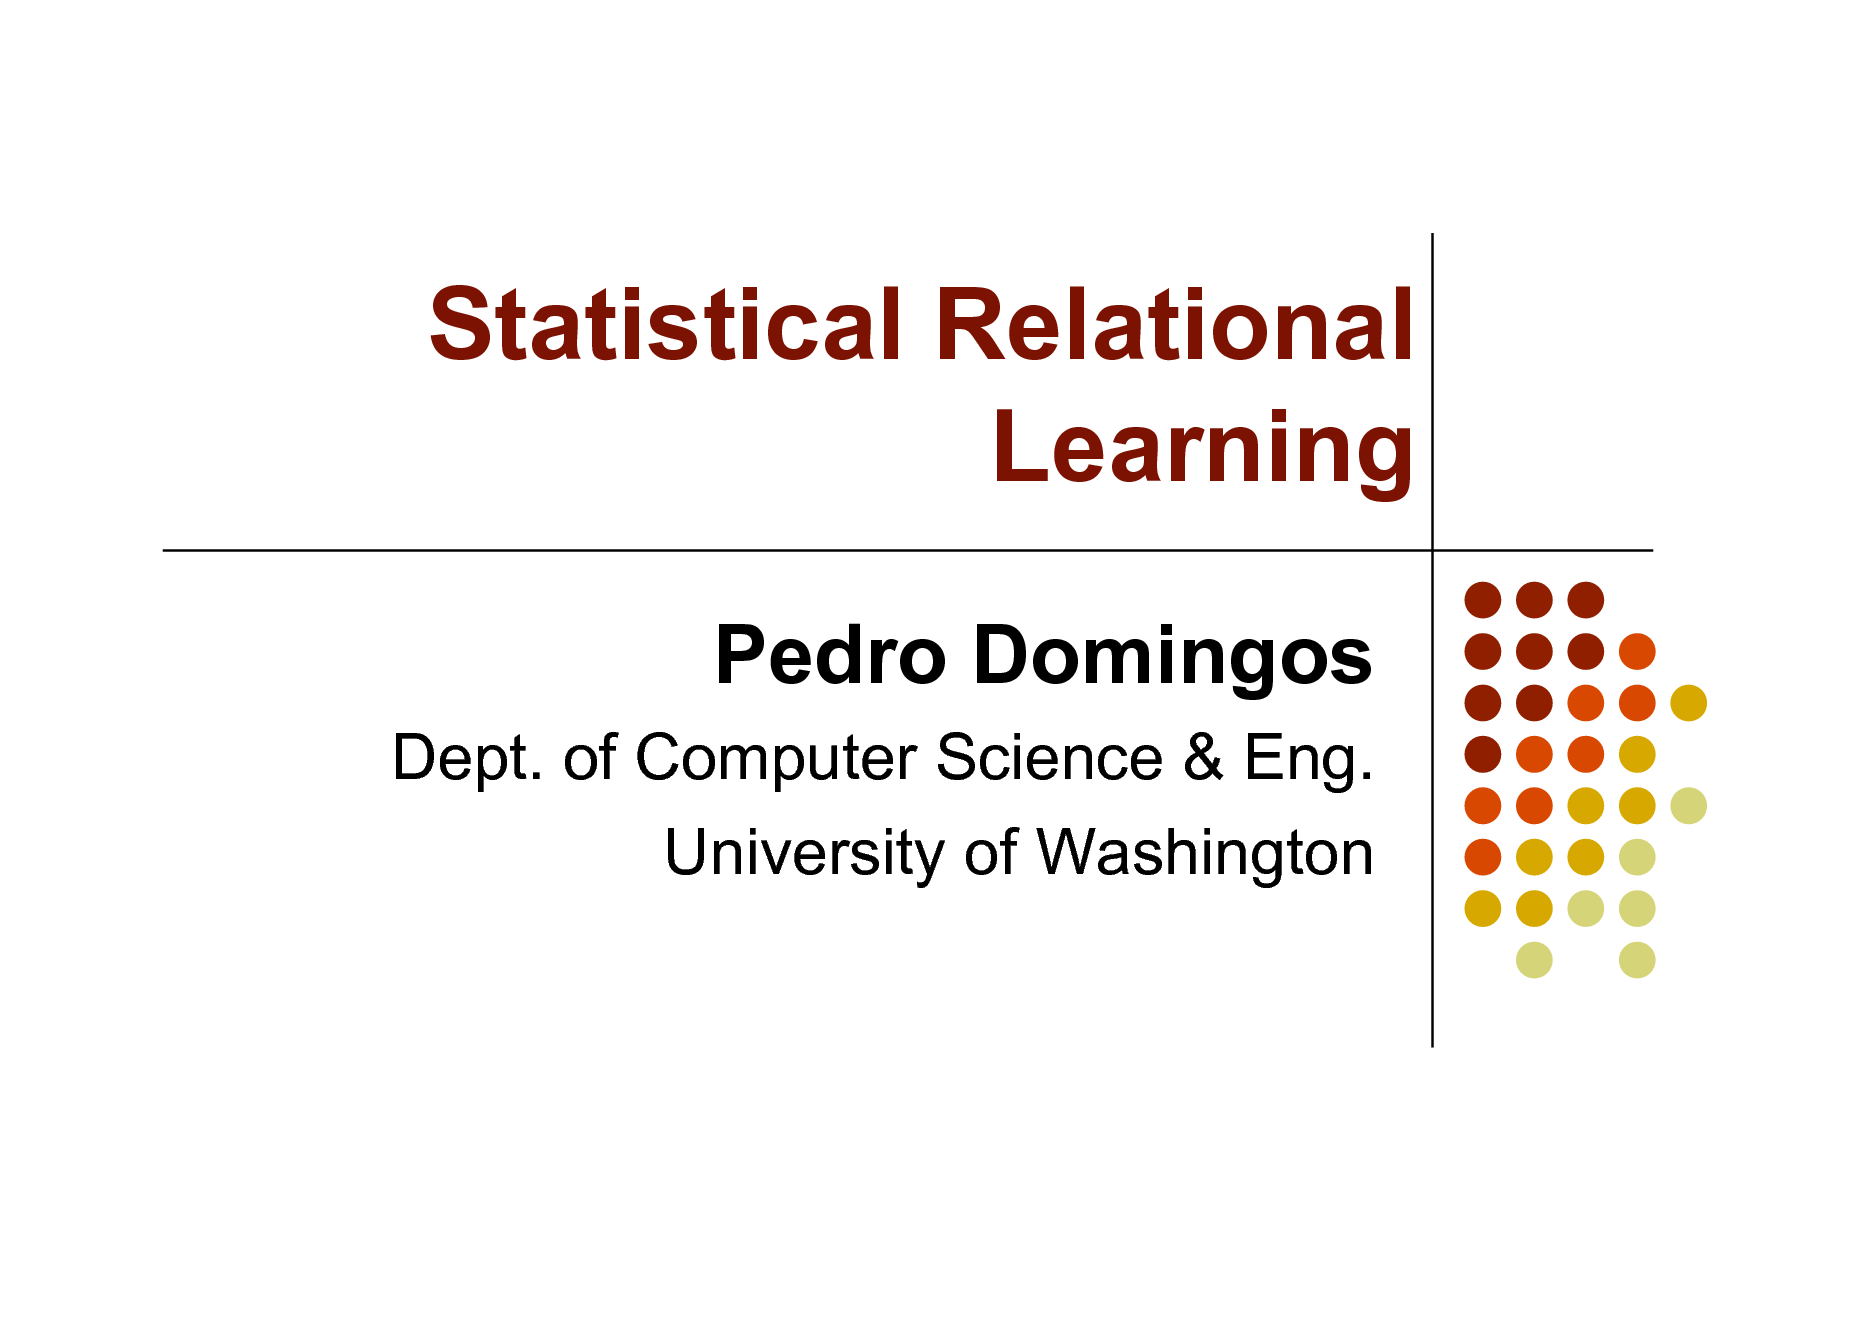 Slide: Statistical Relational Learning
Pedro Domingos
Dept. of Computer Science & Eng. University of Washington

